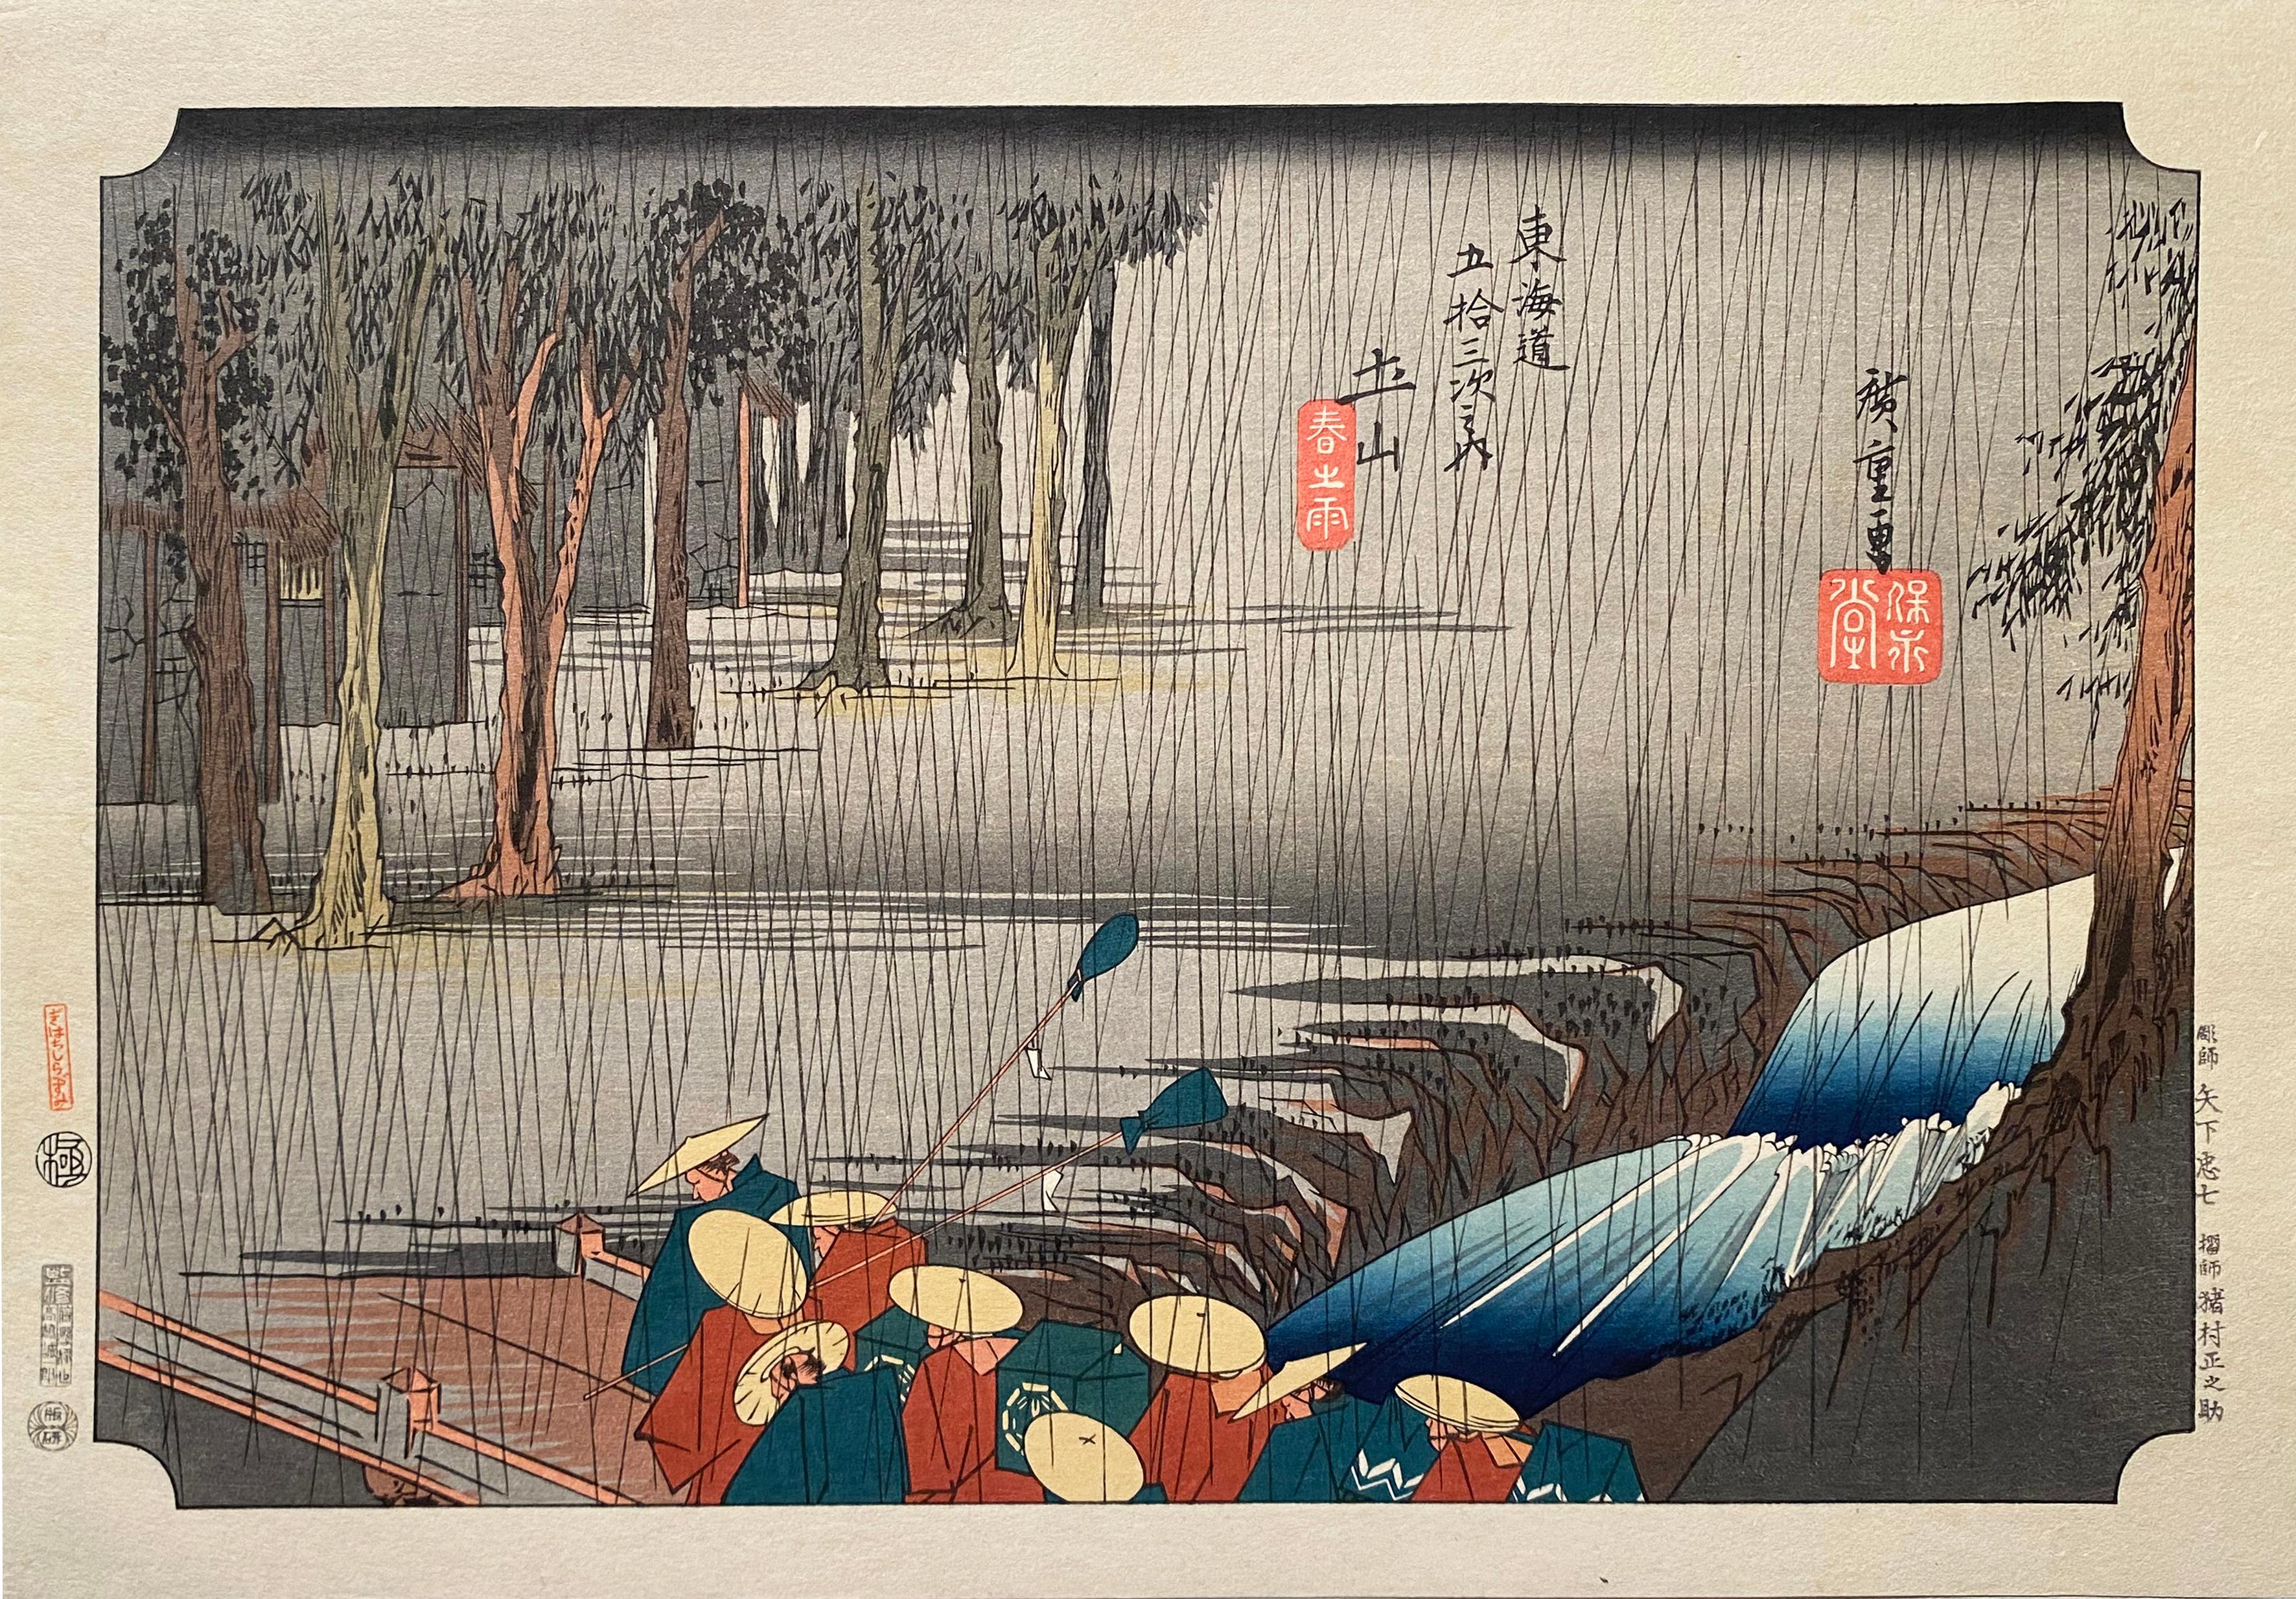 Utagawa Hiroshige (Ando Hiroshige) Landscape Print – Eine Ansicht von Tsuchiyama", nach Utagawa Hiroshige 歌川廣重, Ukiyo-e Holzschnitt, Tokaido